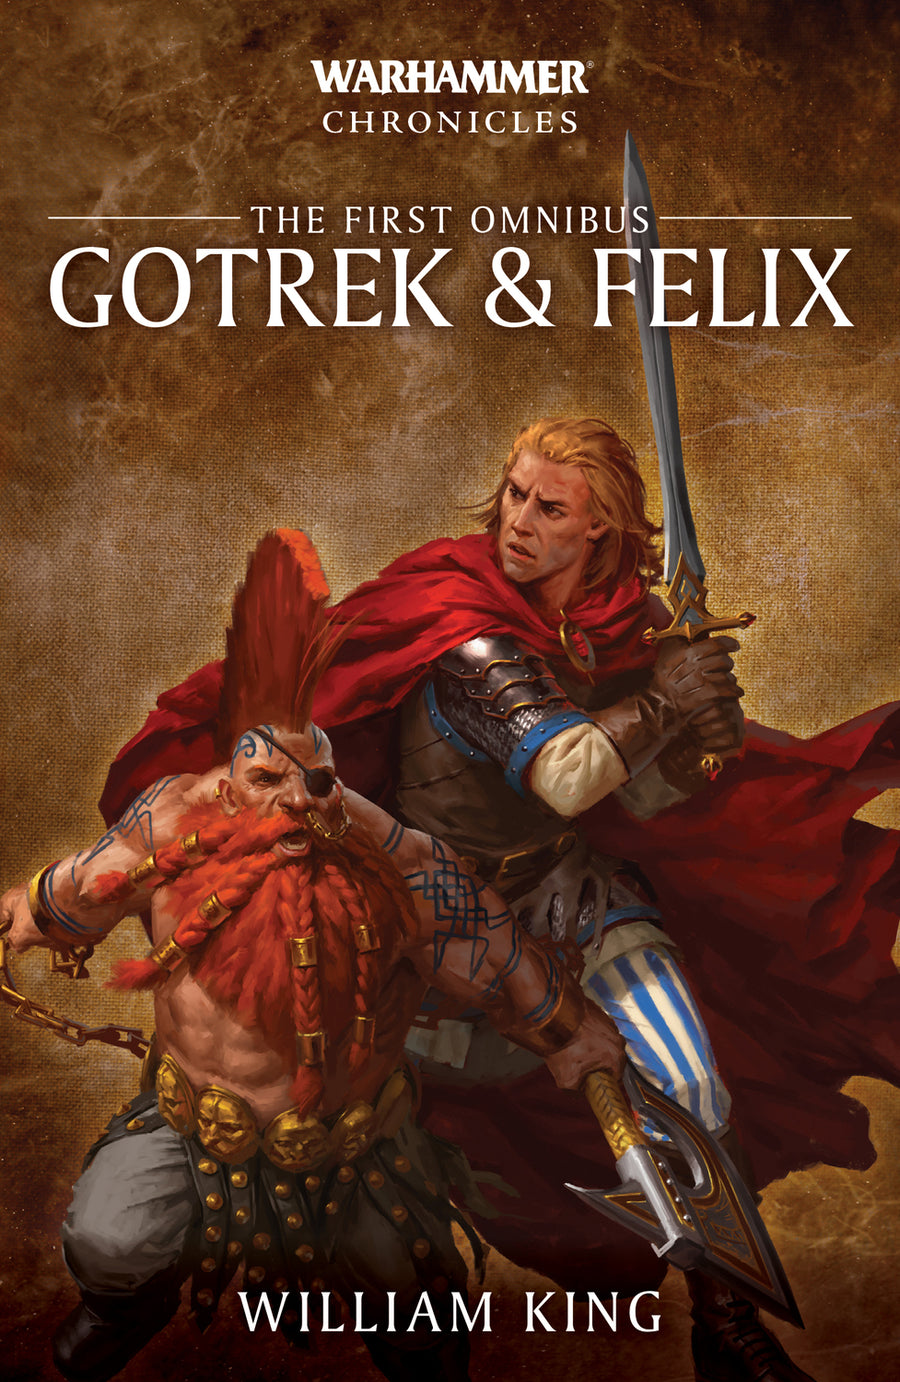 Gotrek & Felix: THE FIRST OMNIBUS